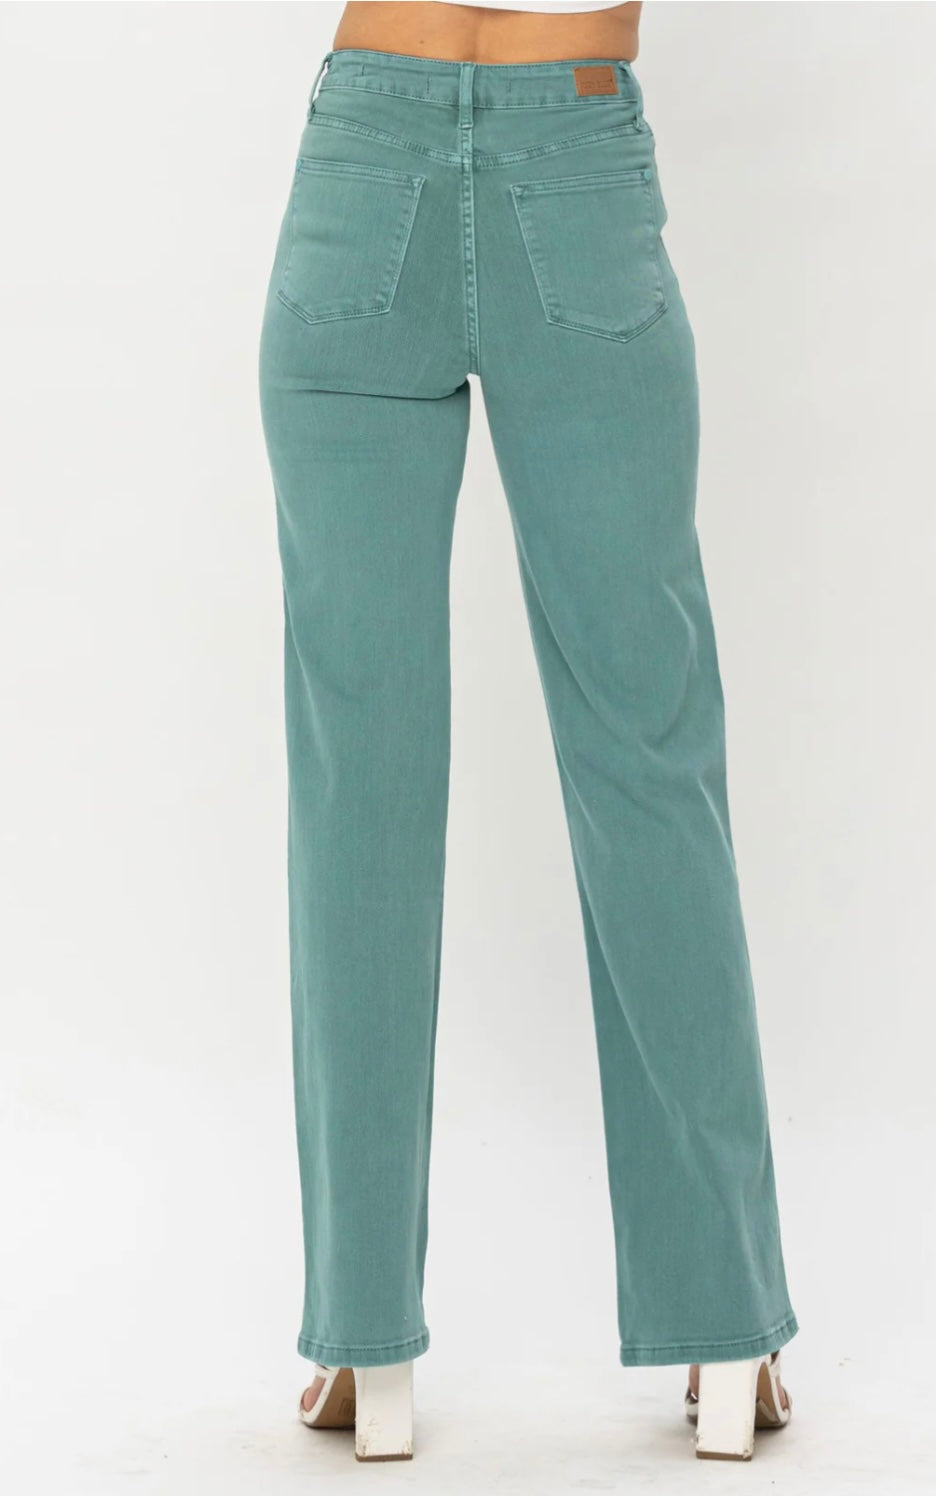 Judy Blue Sea Green 90s Jeans